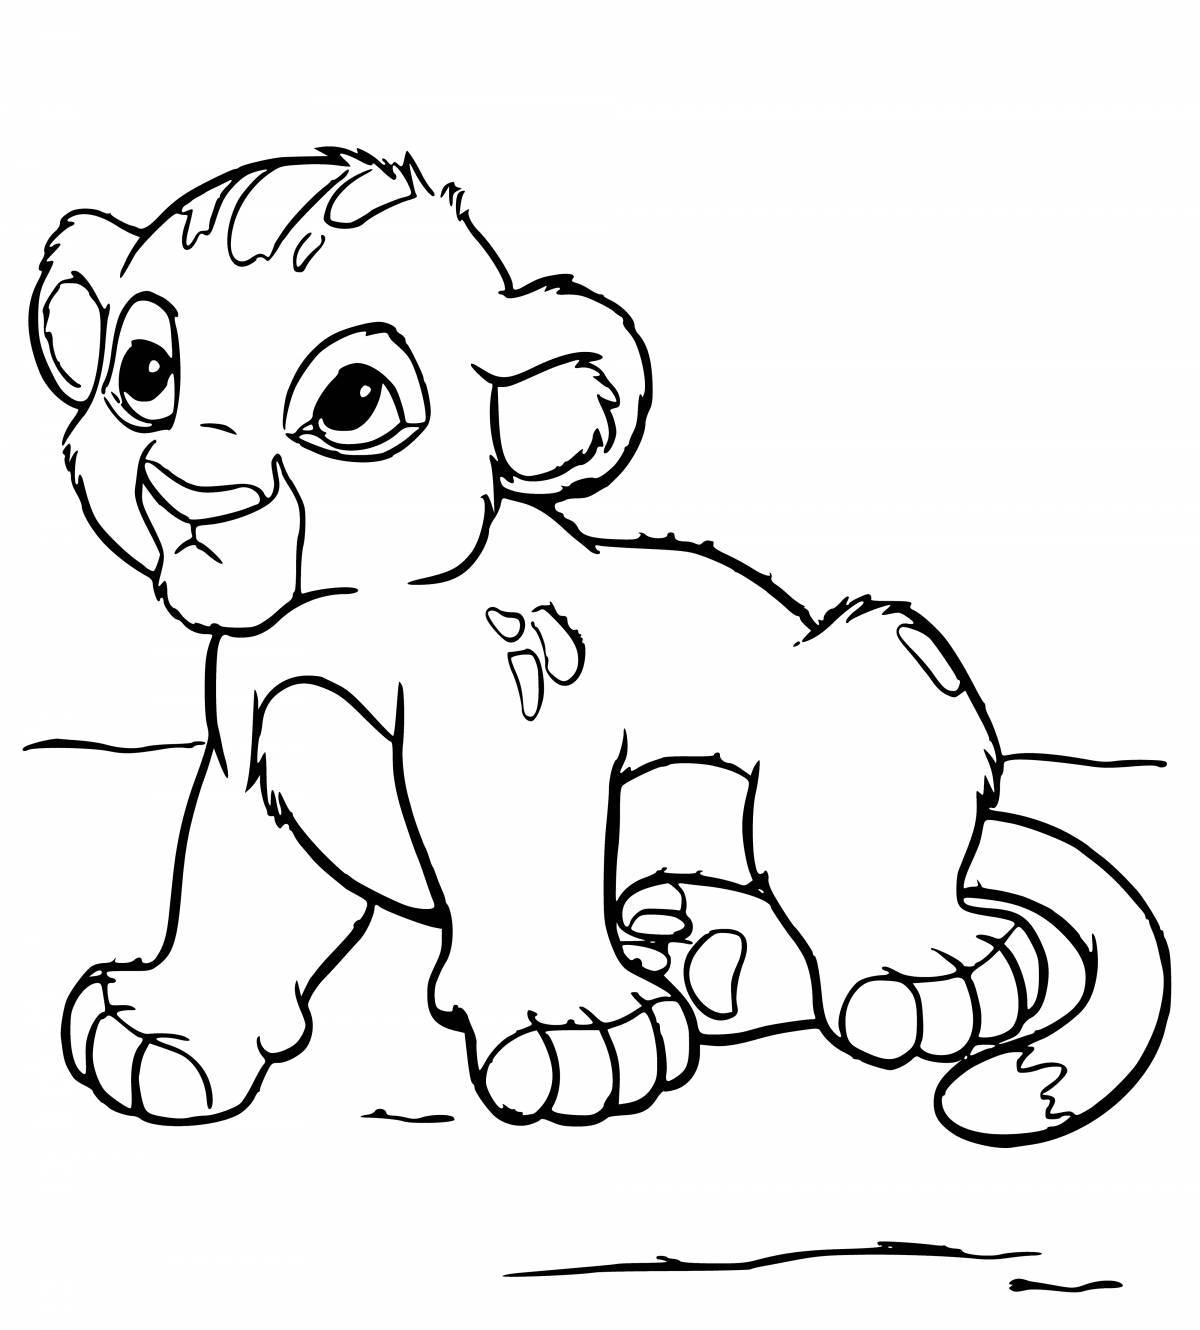 Simba playful coloring page